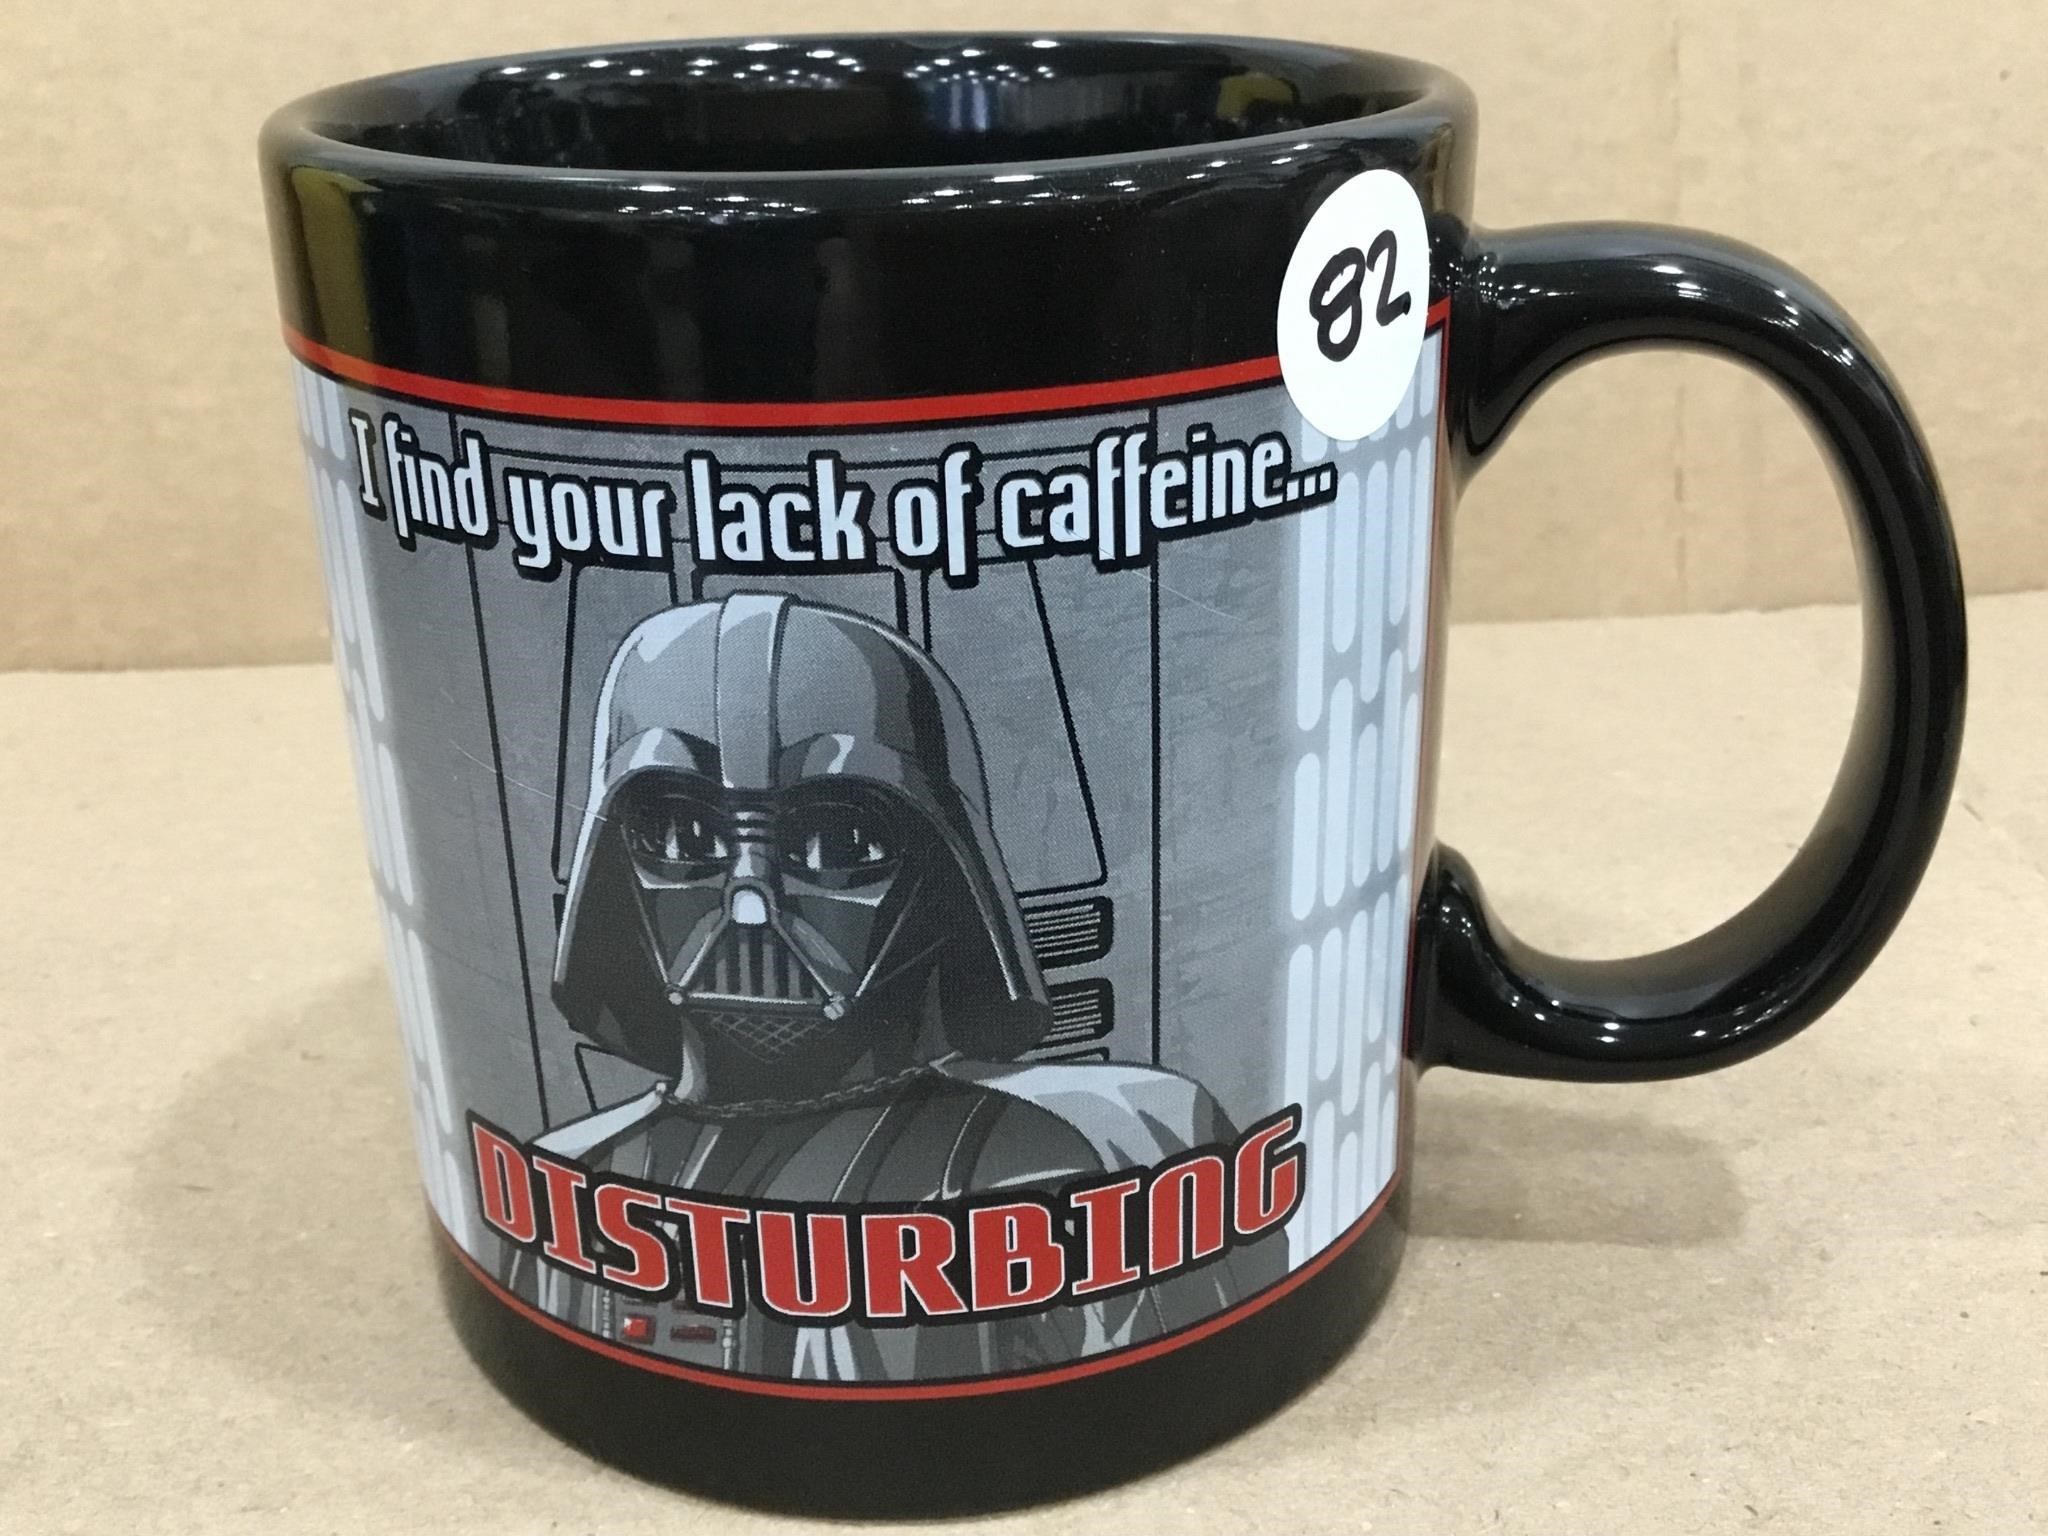 Star Wars Darth Vader Coffee Mug